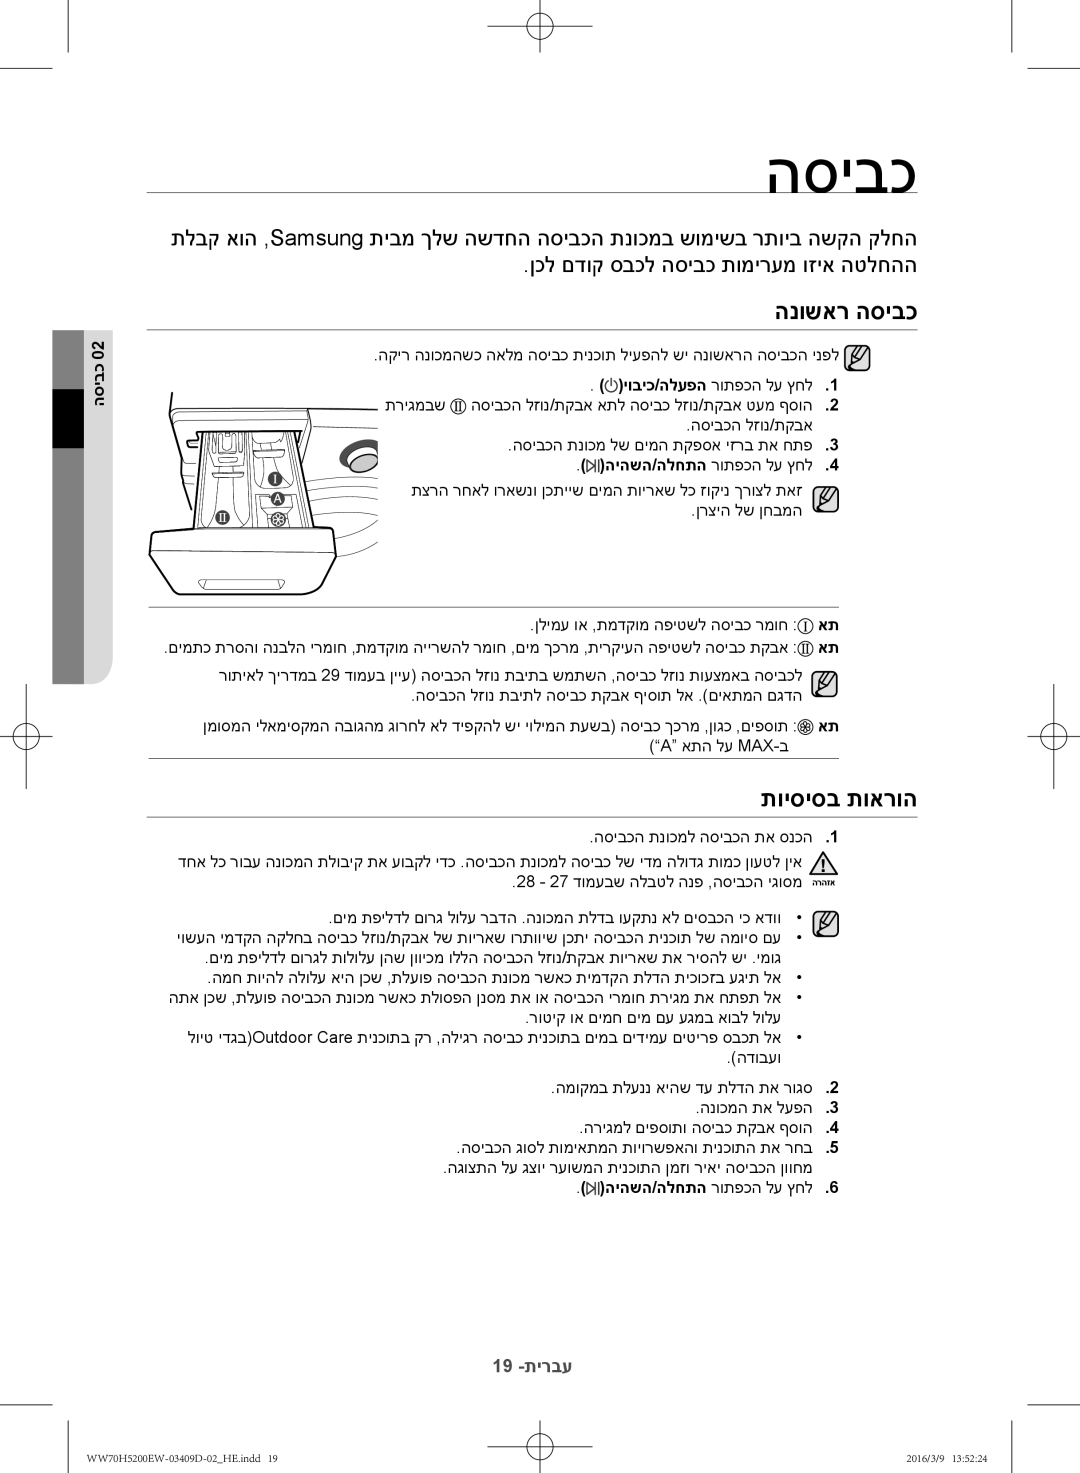 Samsung WW70H5200EW/KJ manual הנושאר הסיבכ, תויסיסב תוארוה, היהשה/הלחתה רותפכה לע ץחל 